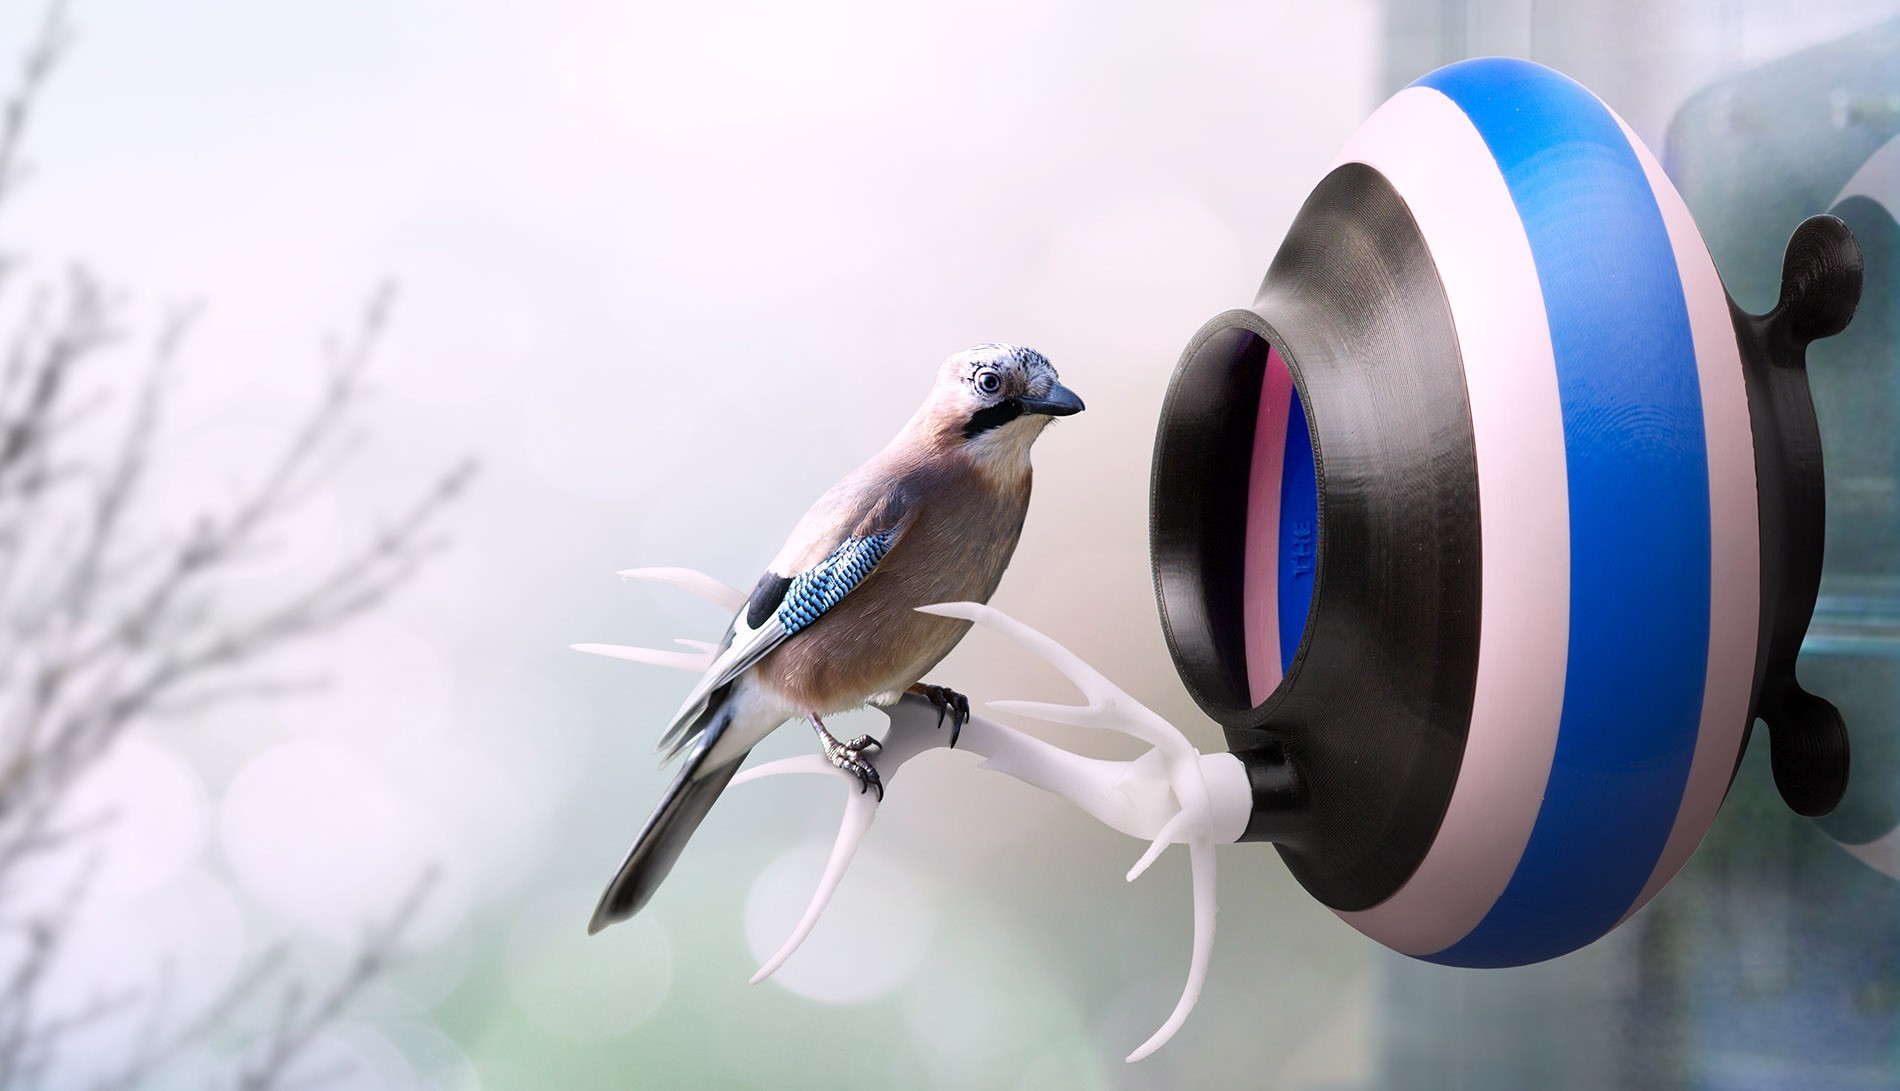 3D printer, 3D printed nest, Printednest, birds, nature.